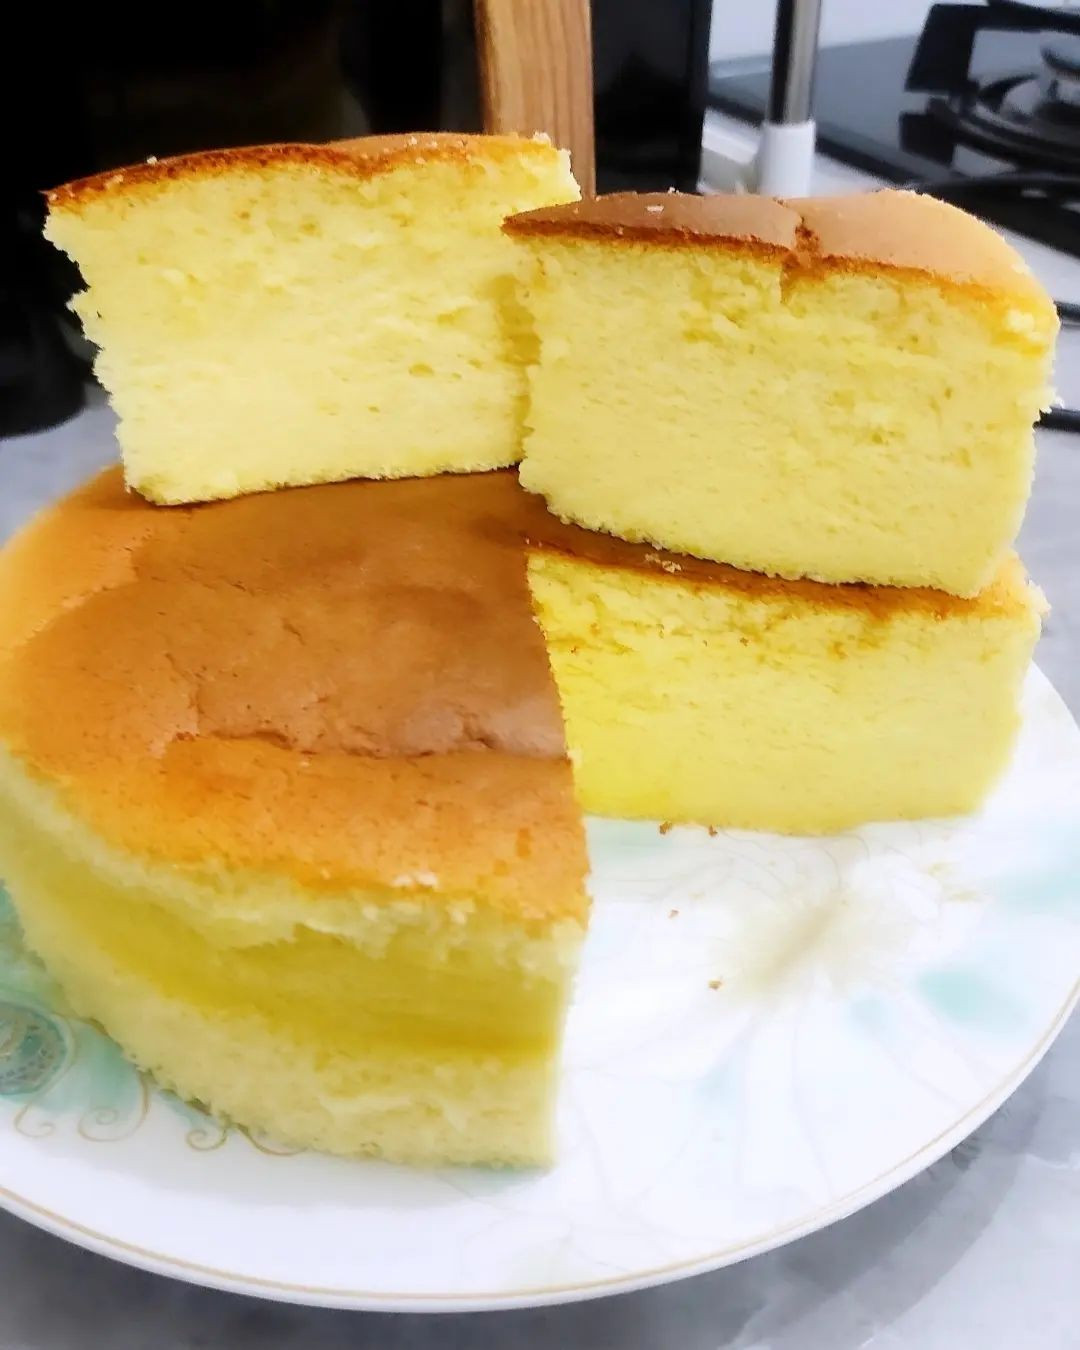 Japanese Chesse Cake Medium size 18cm